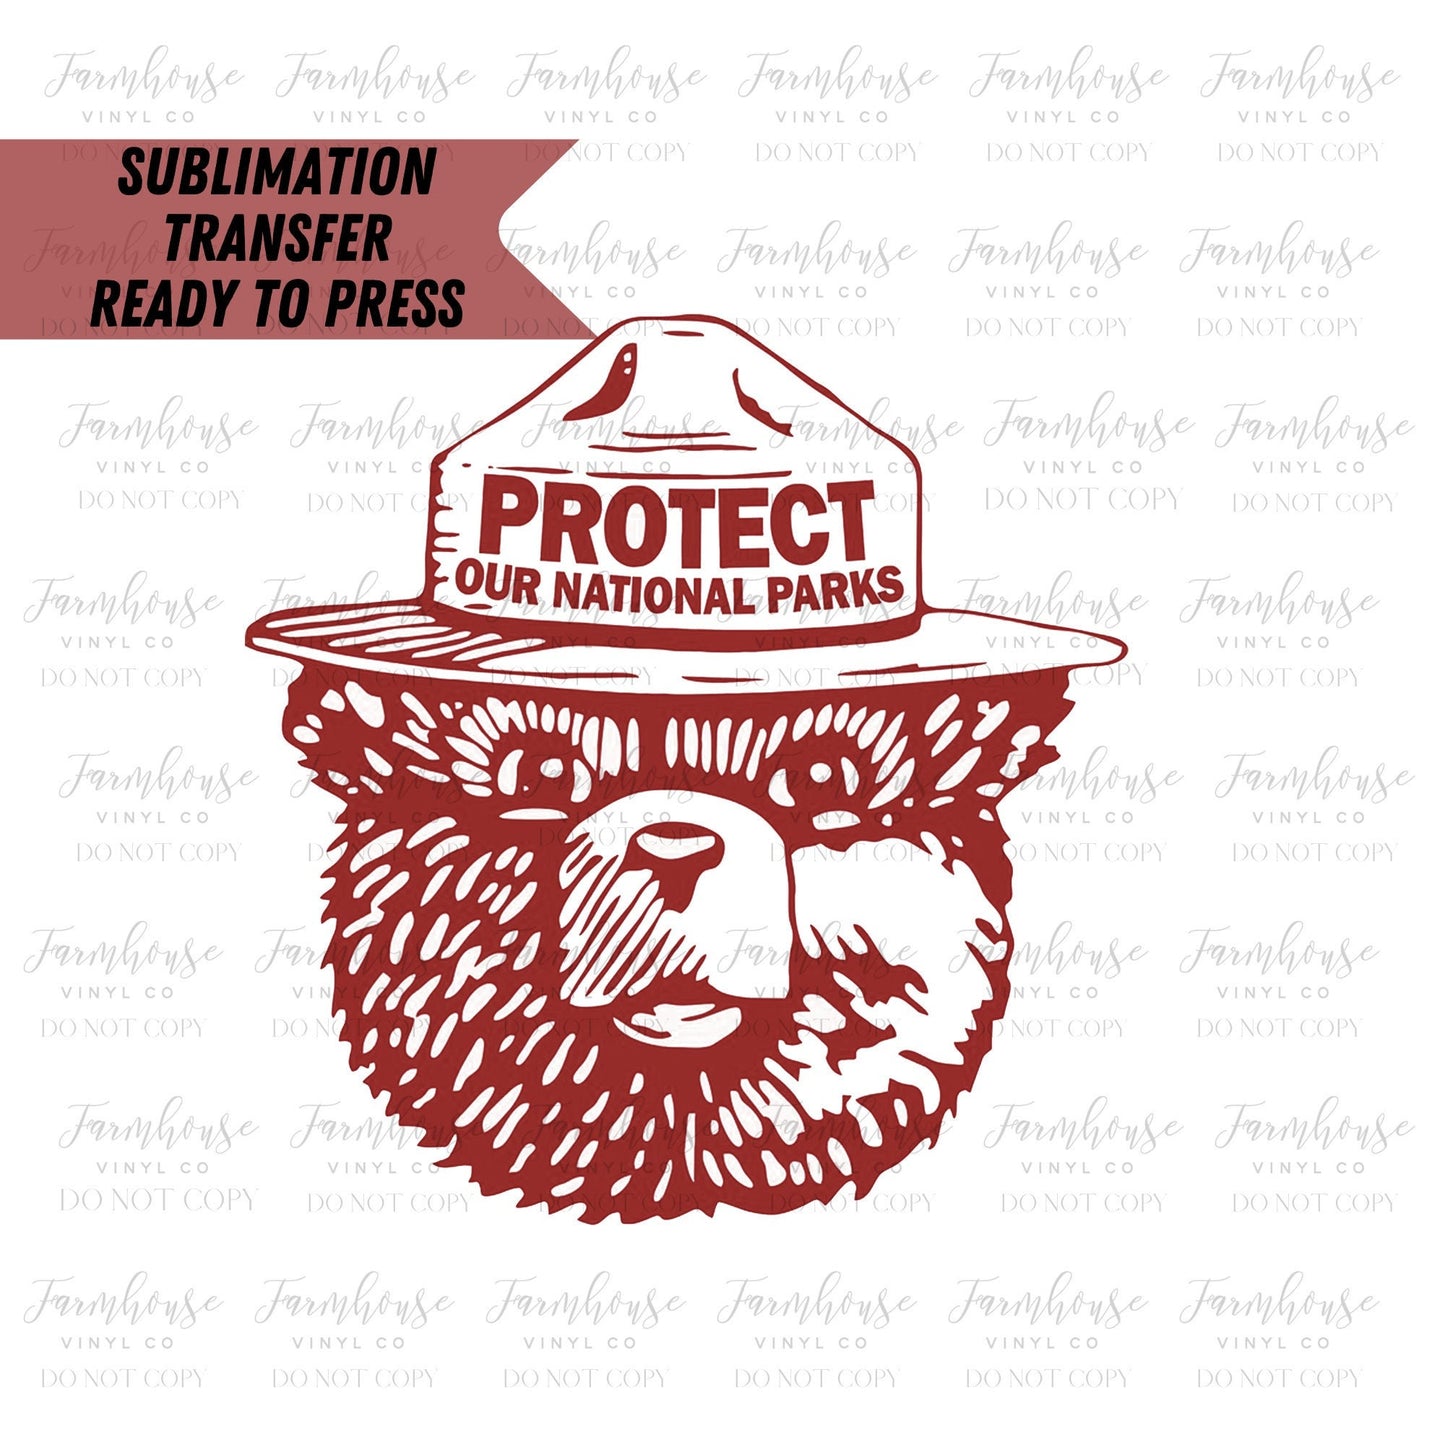 Protect Our National Parks Smokey Ready to Press Sublimation Transfer - Farmhouse Vinyl Co